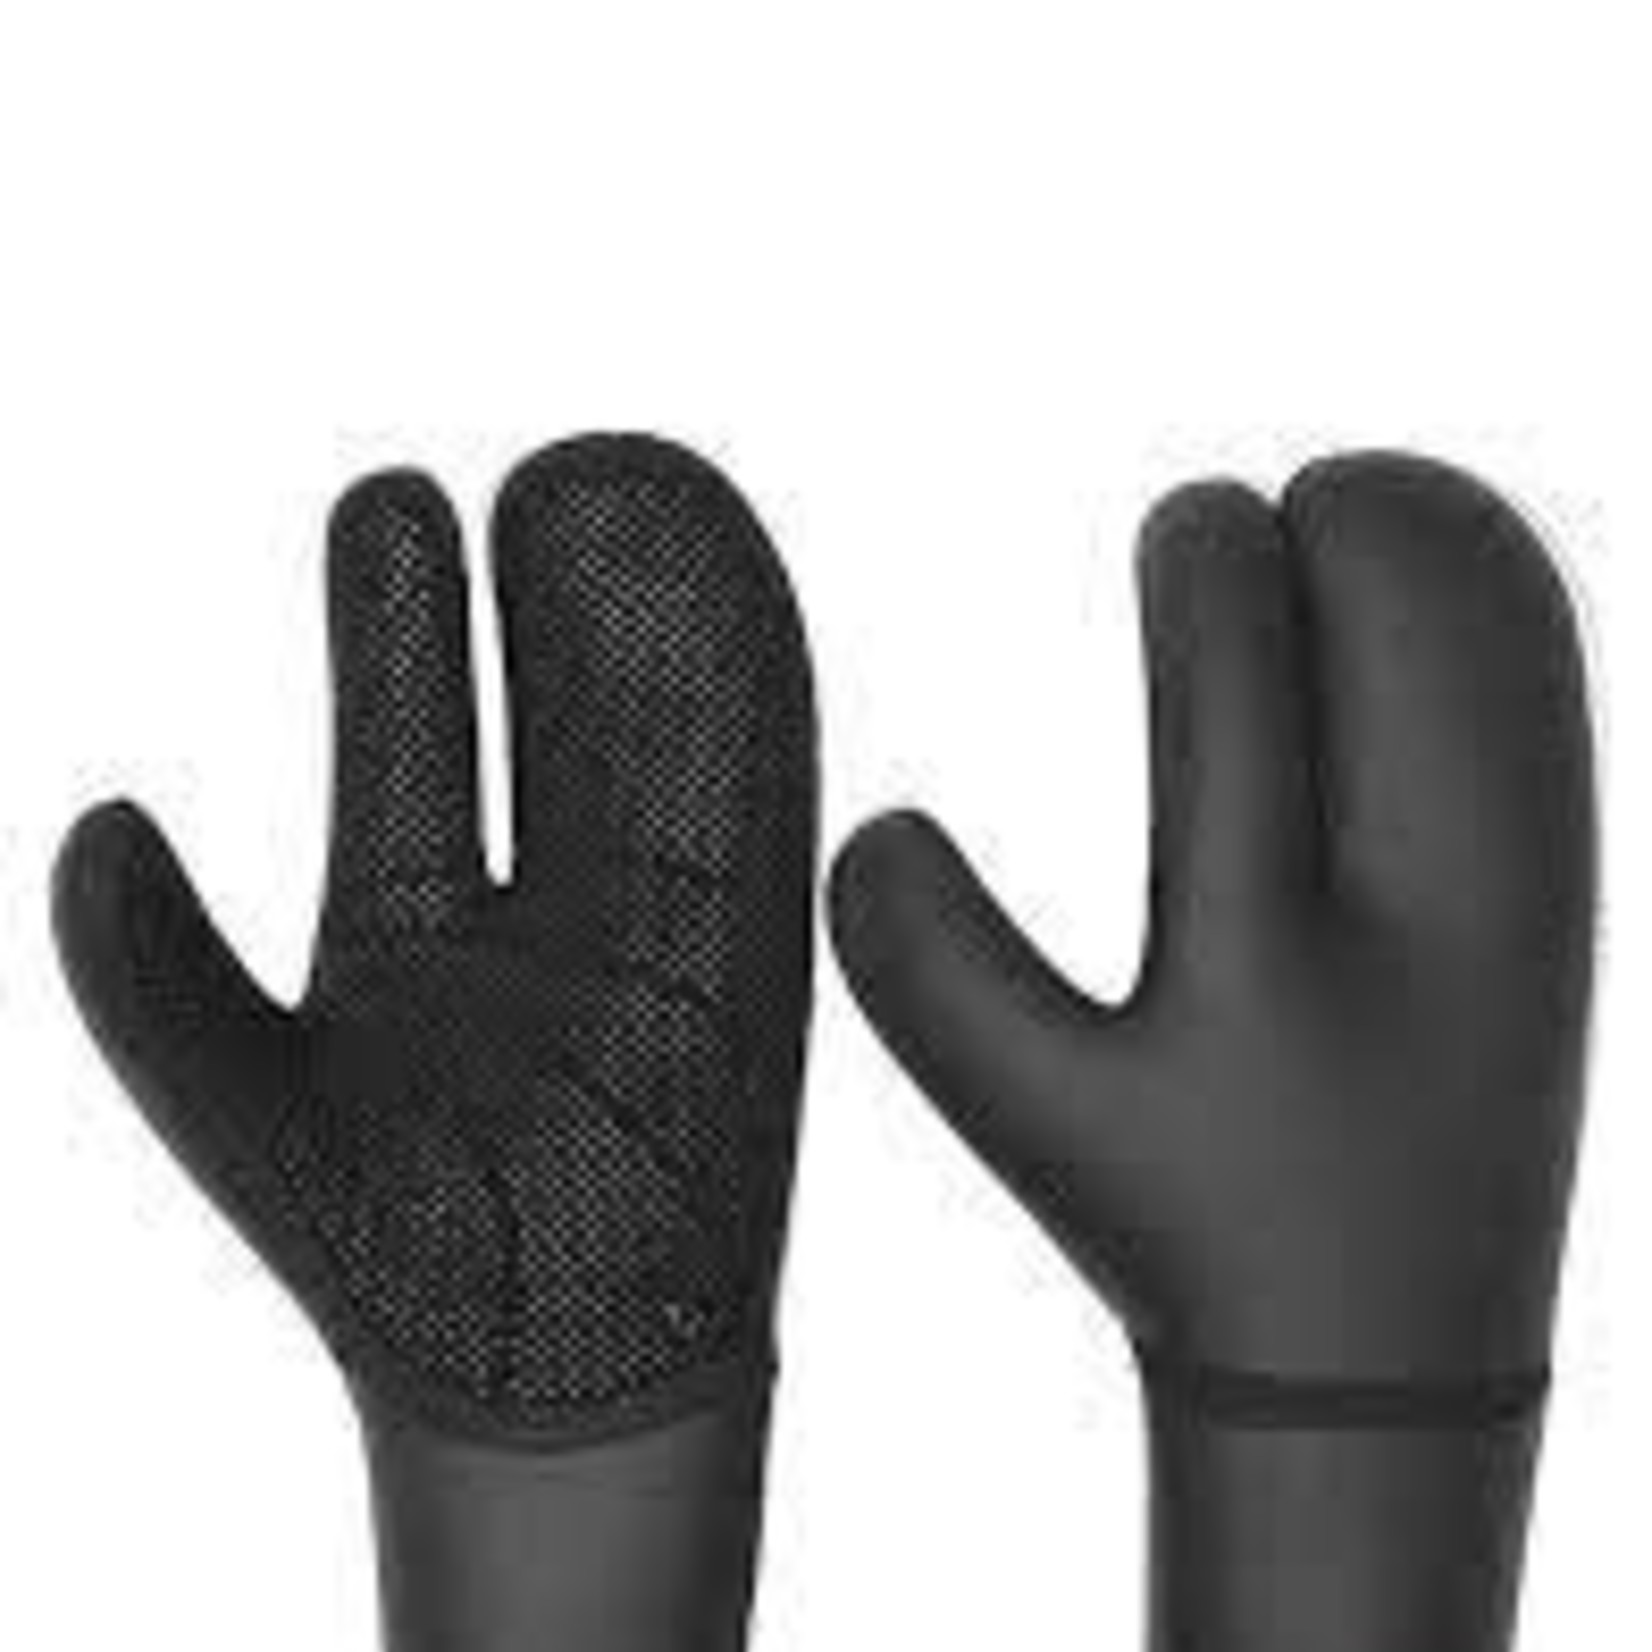 Vissla 7 seas 5mm claw glove